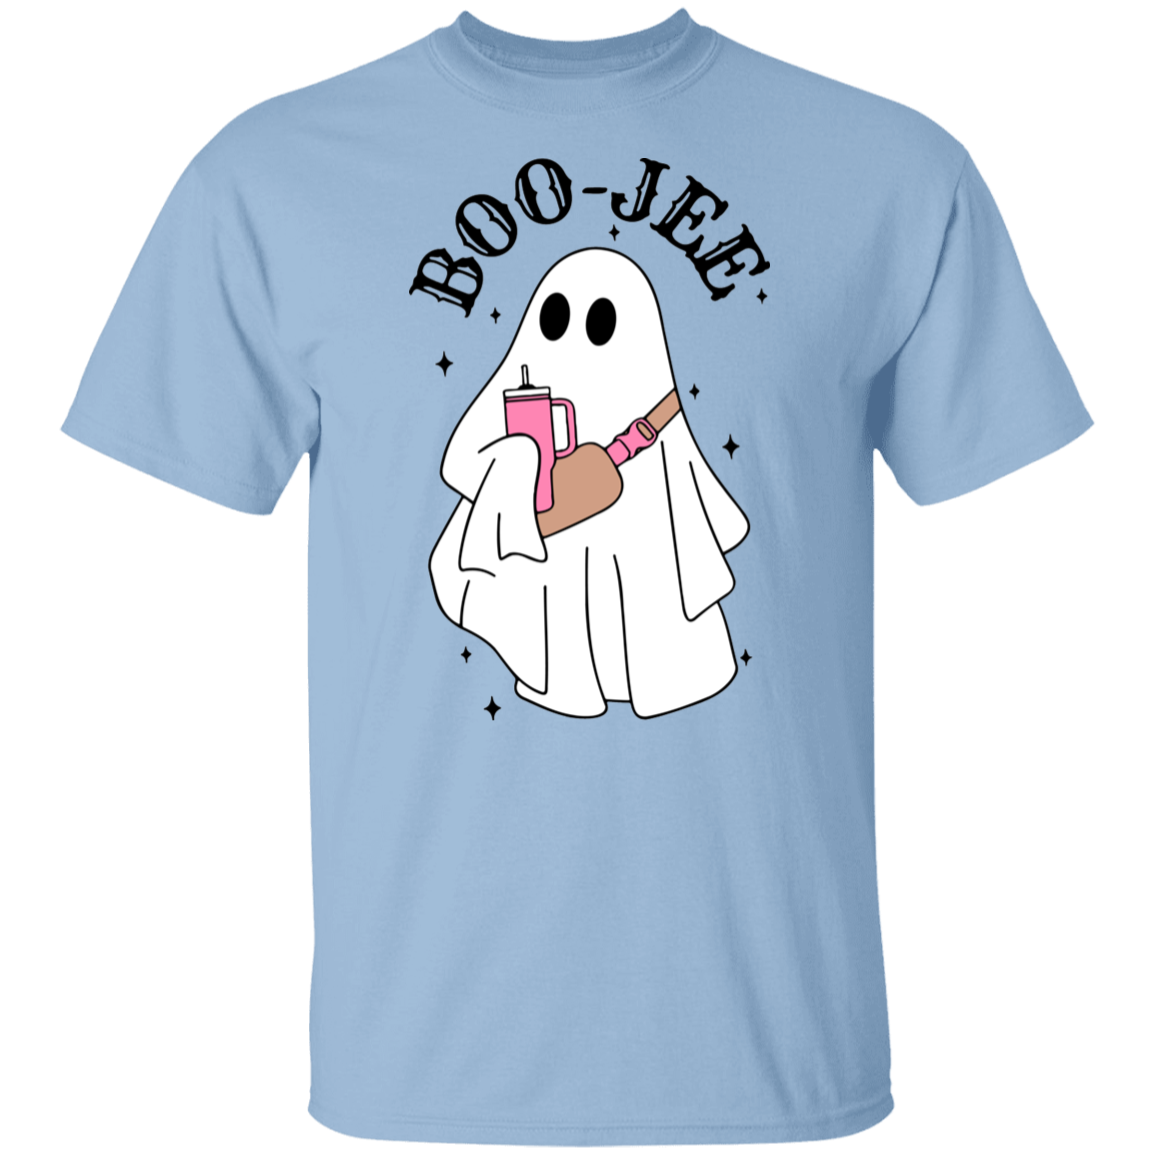 Boo Jee -  T-Shirt